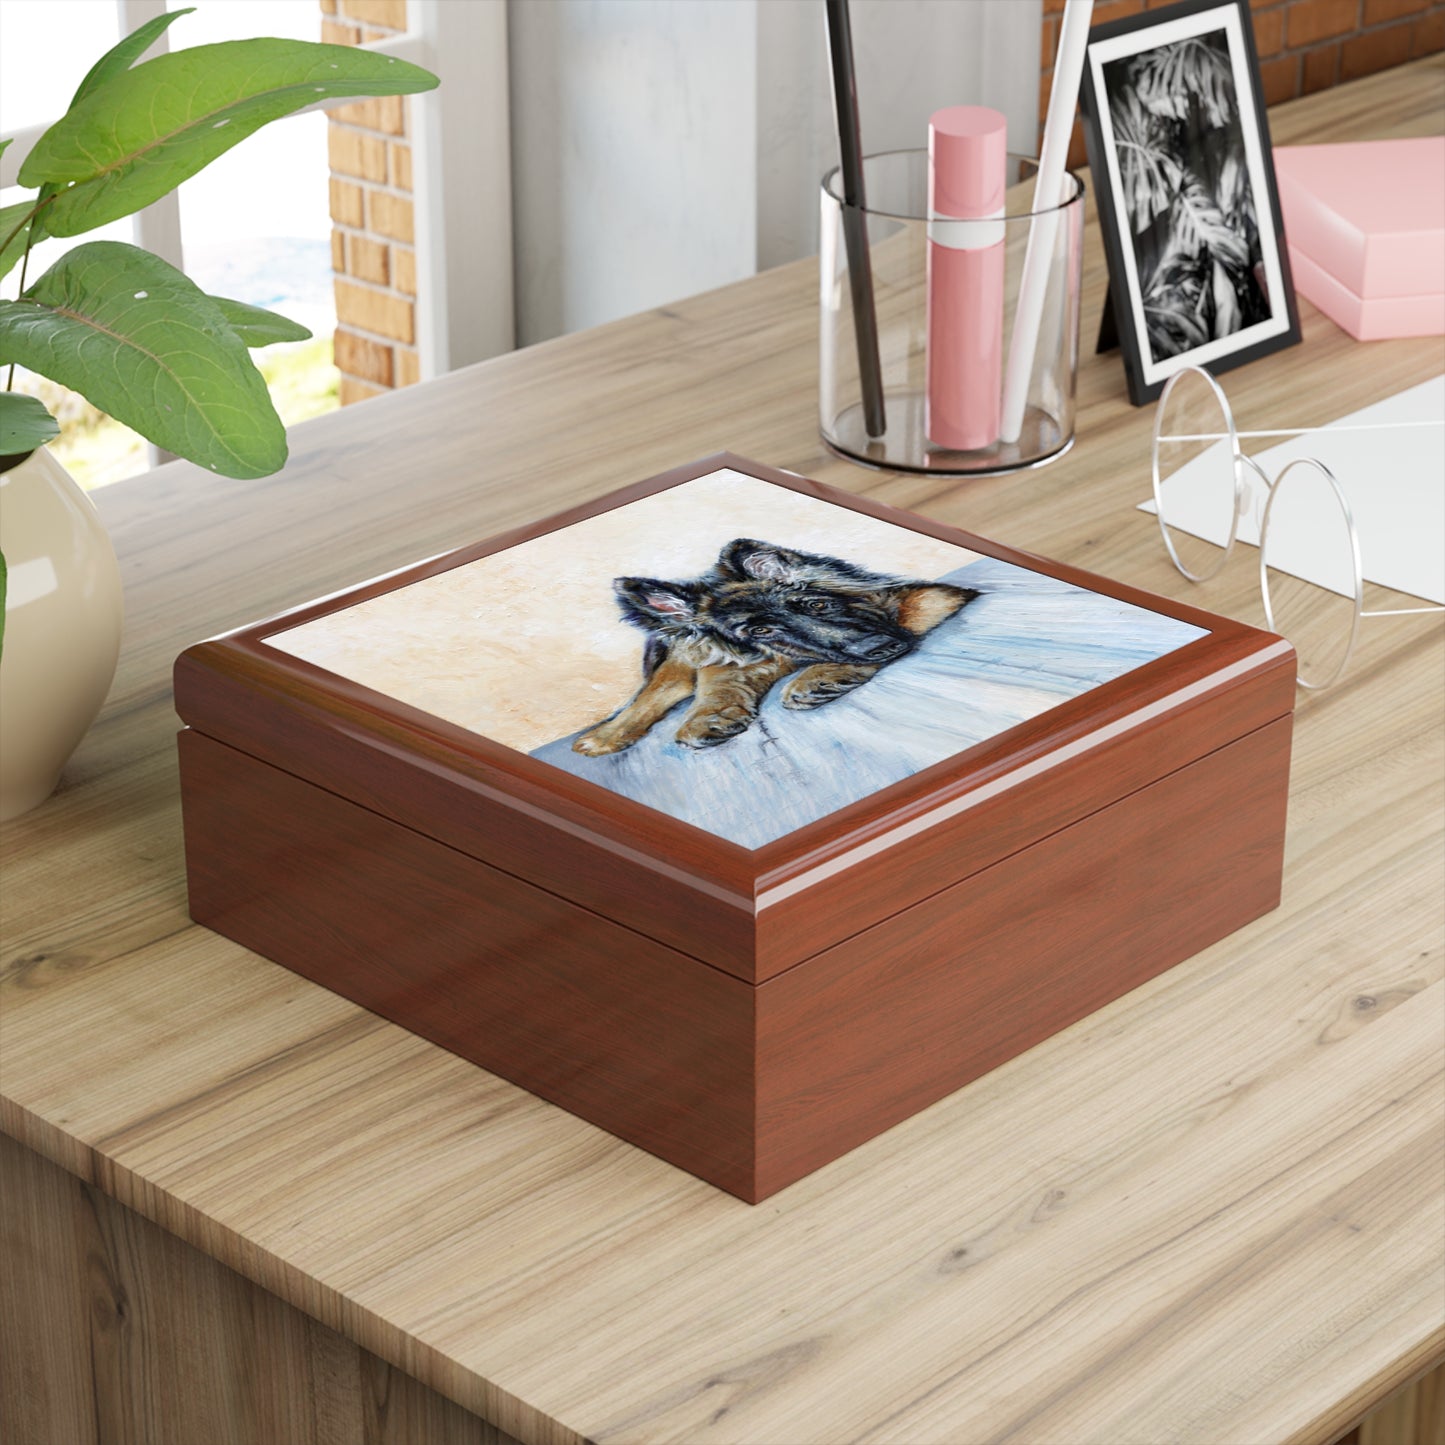 ewelry Box Lacquered  Keepsake box with German Shepherd Image golden oak box